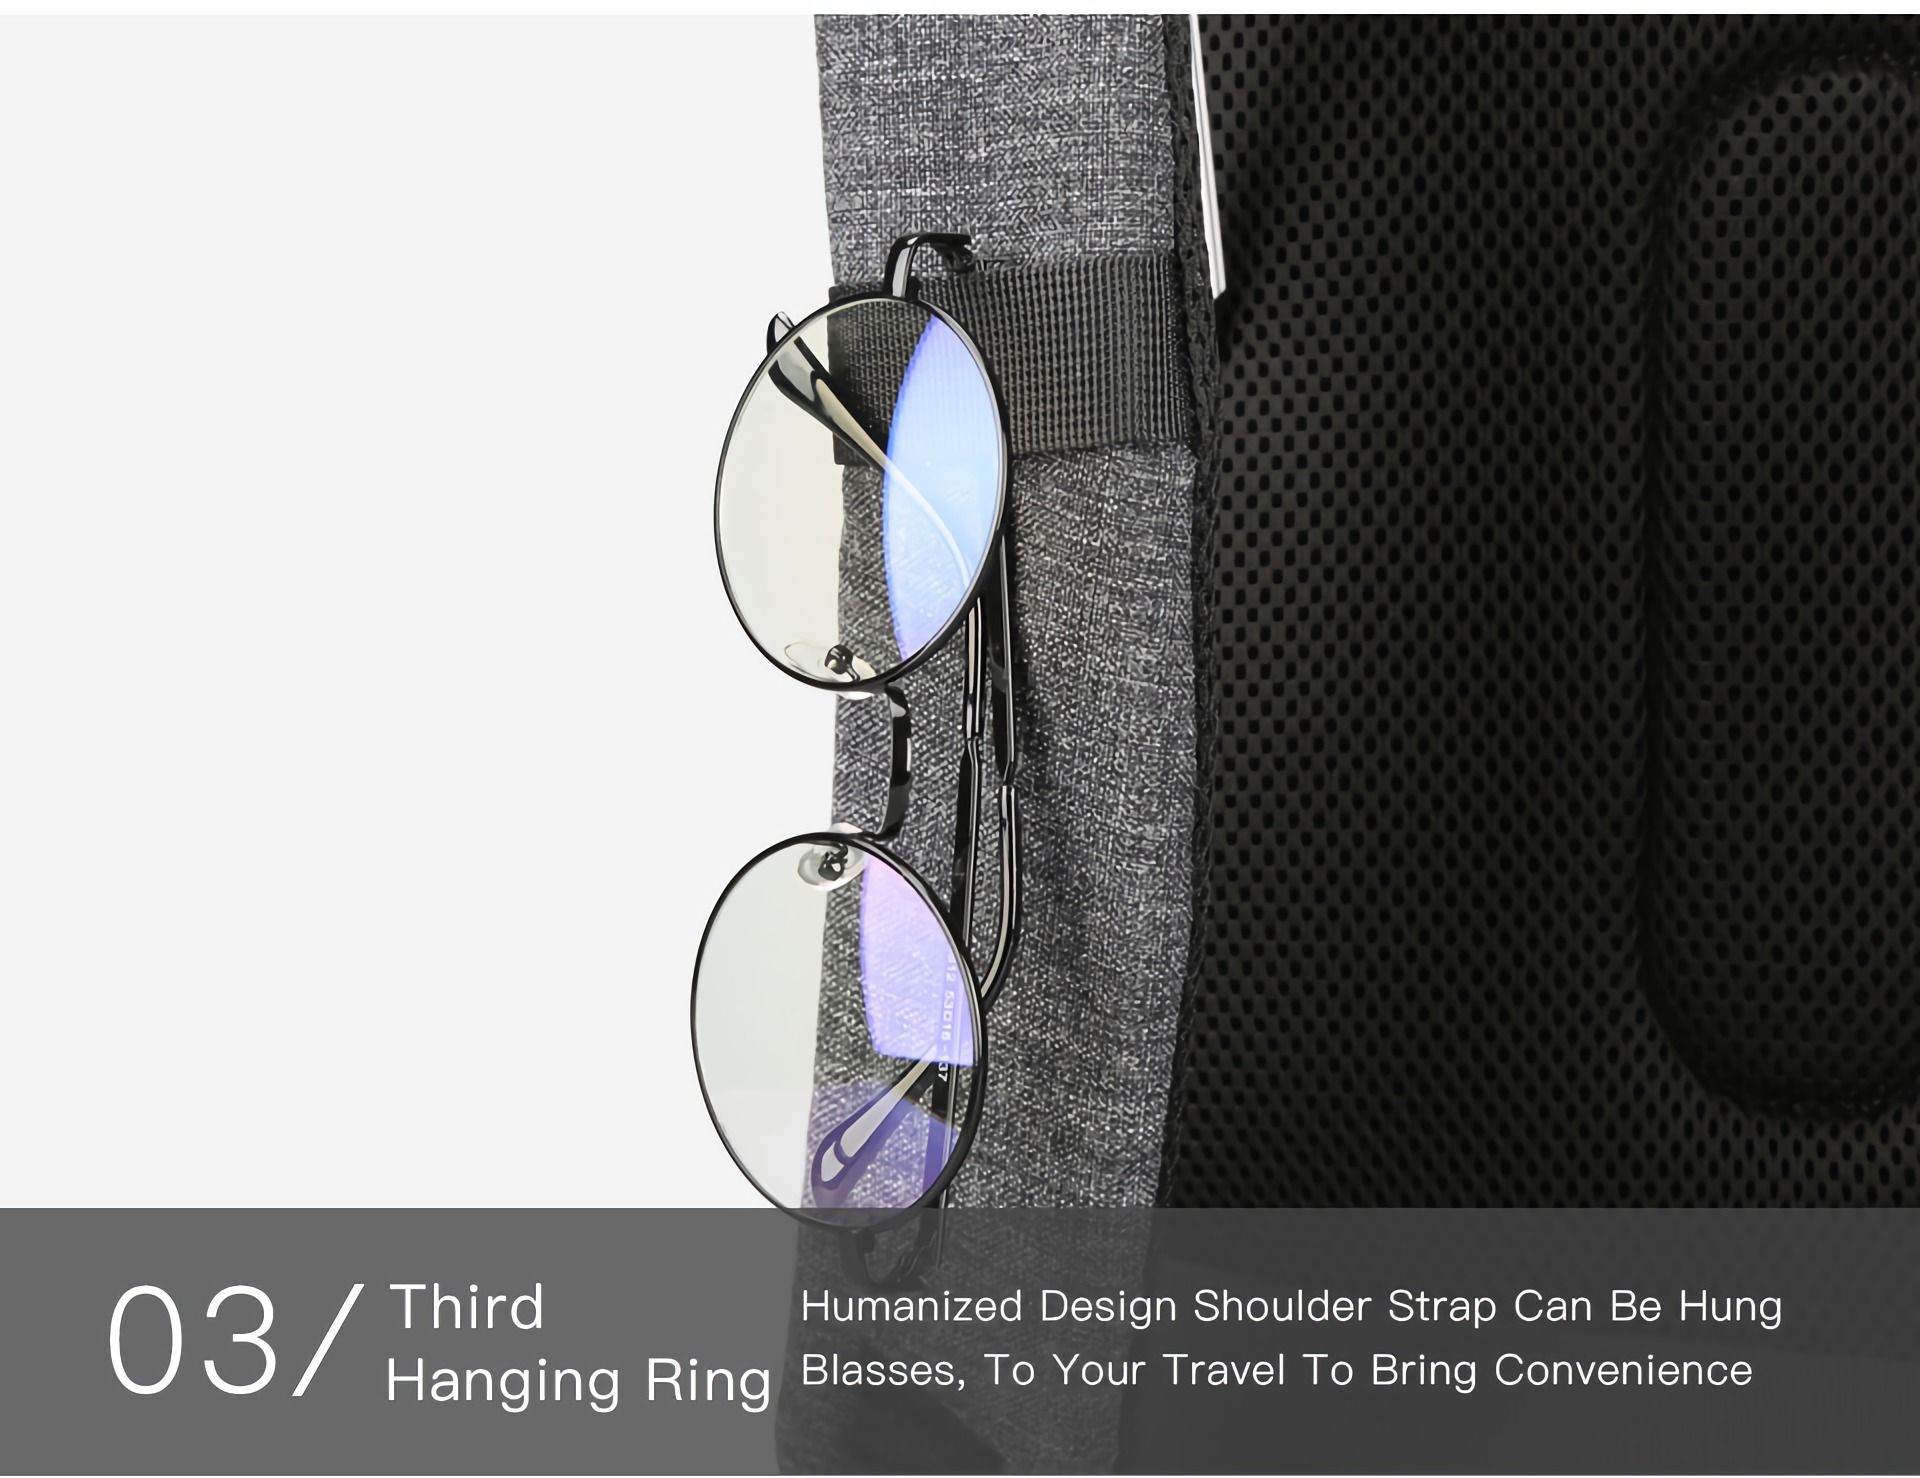 Kingsons-156-inch-Laptop-Backpack-Laptop-Shoulder-Bag-with-USB-Charging-Port-Casual-Daypack-for-Busi-1734442